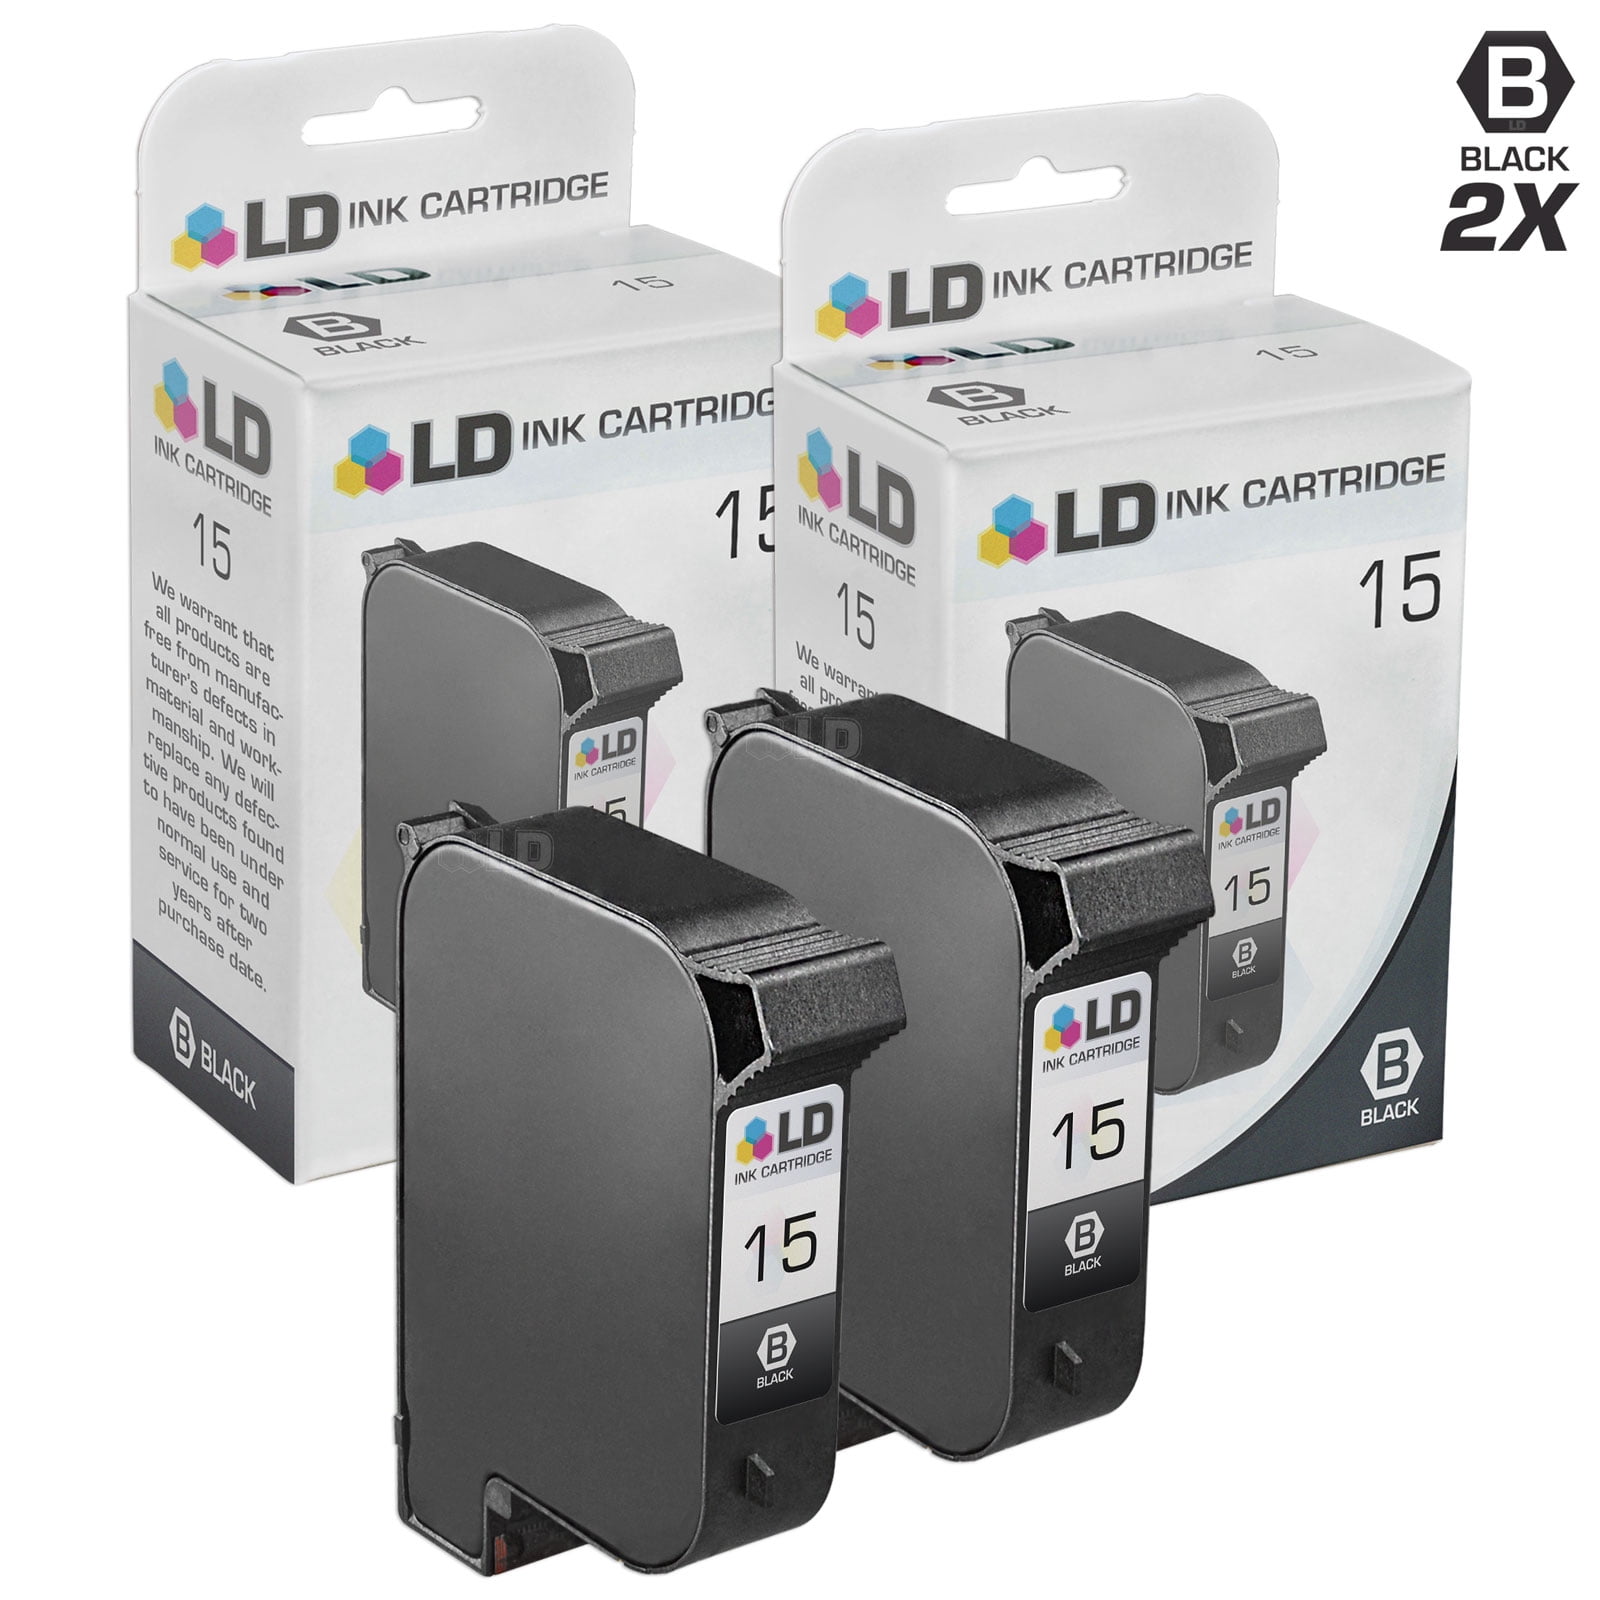 Reizen Begrip Lui LD Brand Remanufactured Cartridge Replacement For HP 15 C6615DN Black  Cartridges 2-Pack For DeskJet 3820, 812C, 920C, 940, Fax 1230, OfficeJet  5110, 5110v, 5110xi, PSC 500, 750, 950 - Walmart.com